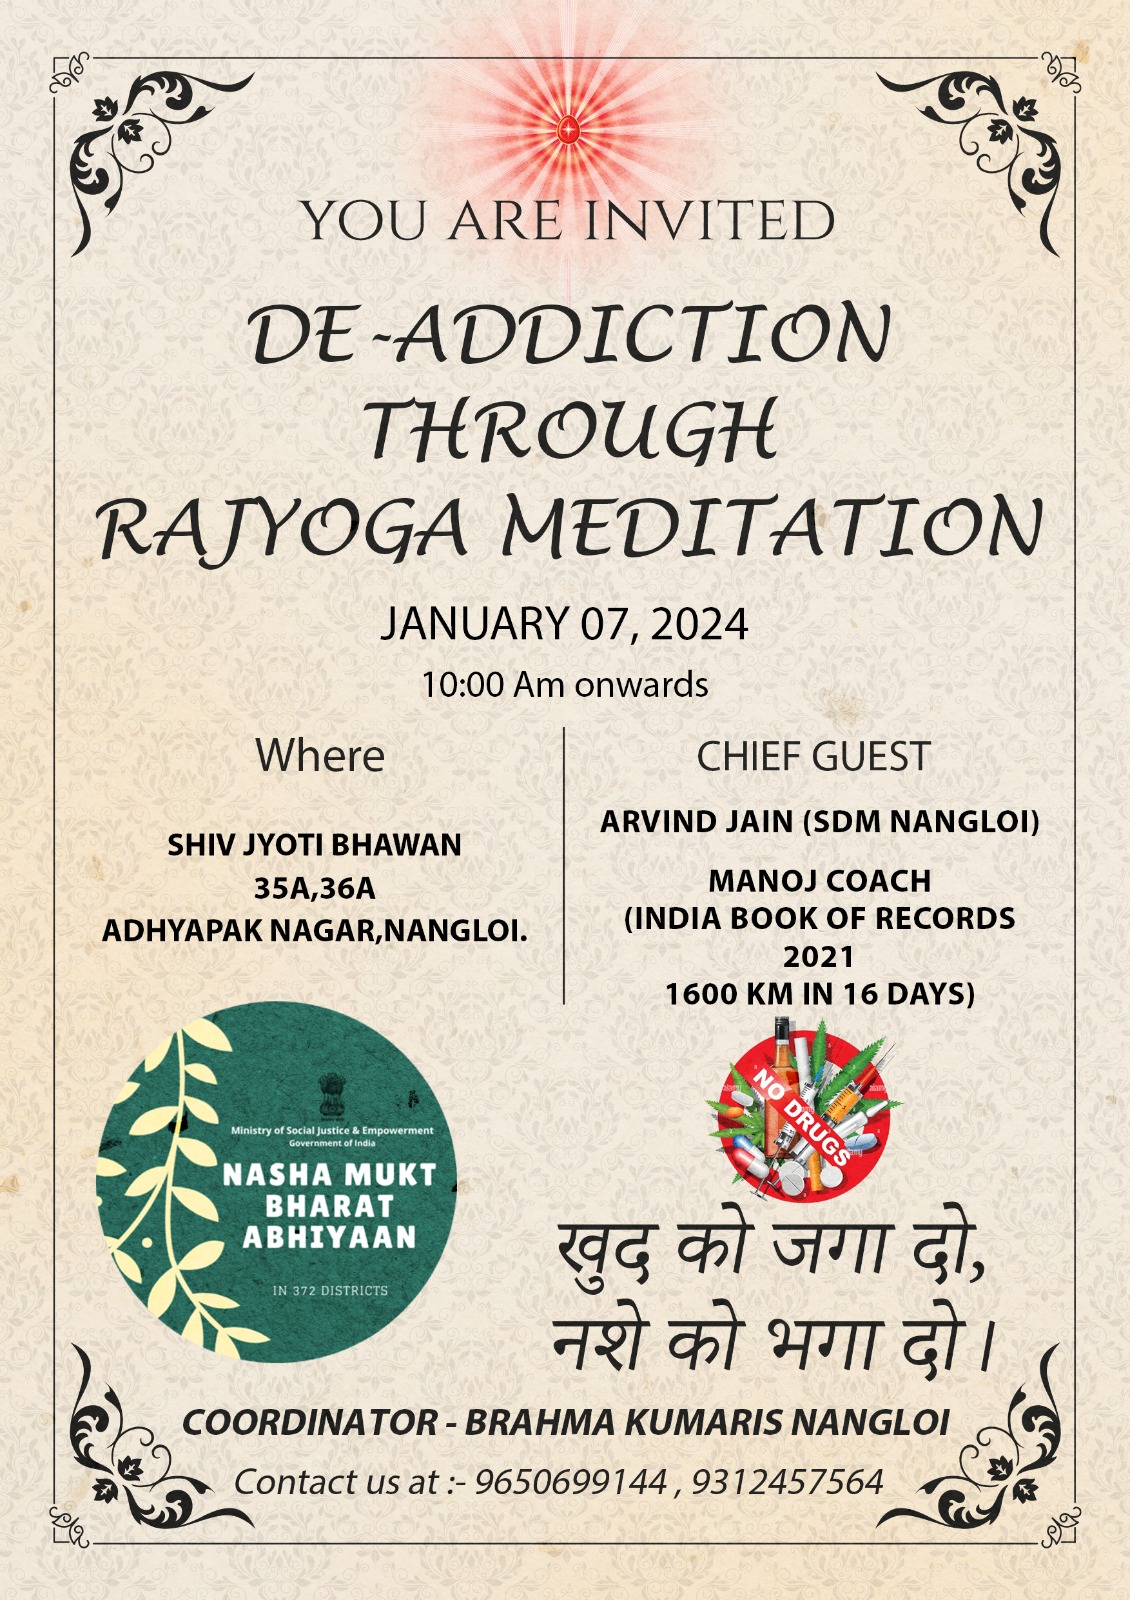 De-addiction through rajyoga meditation – peace walk